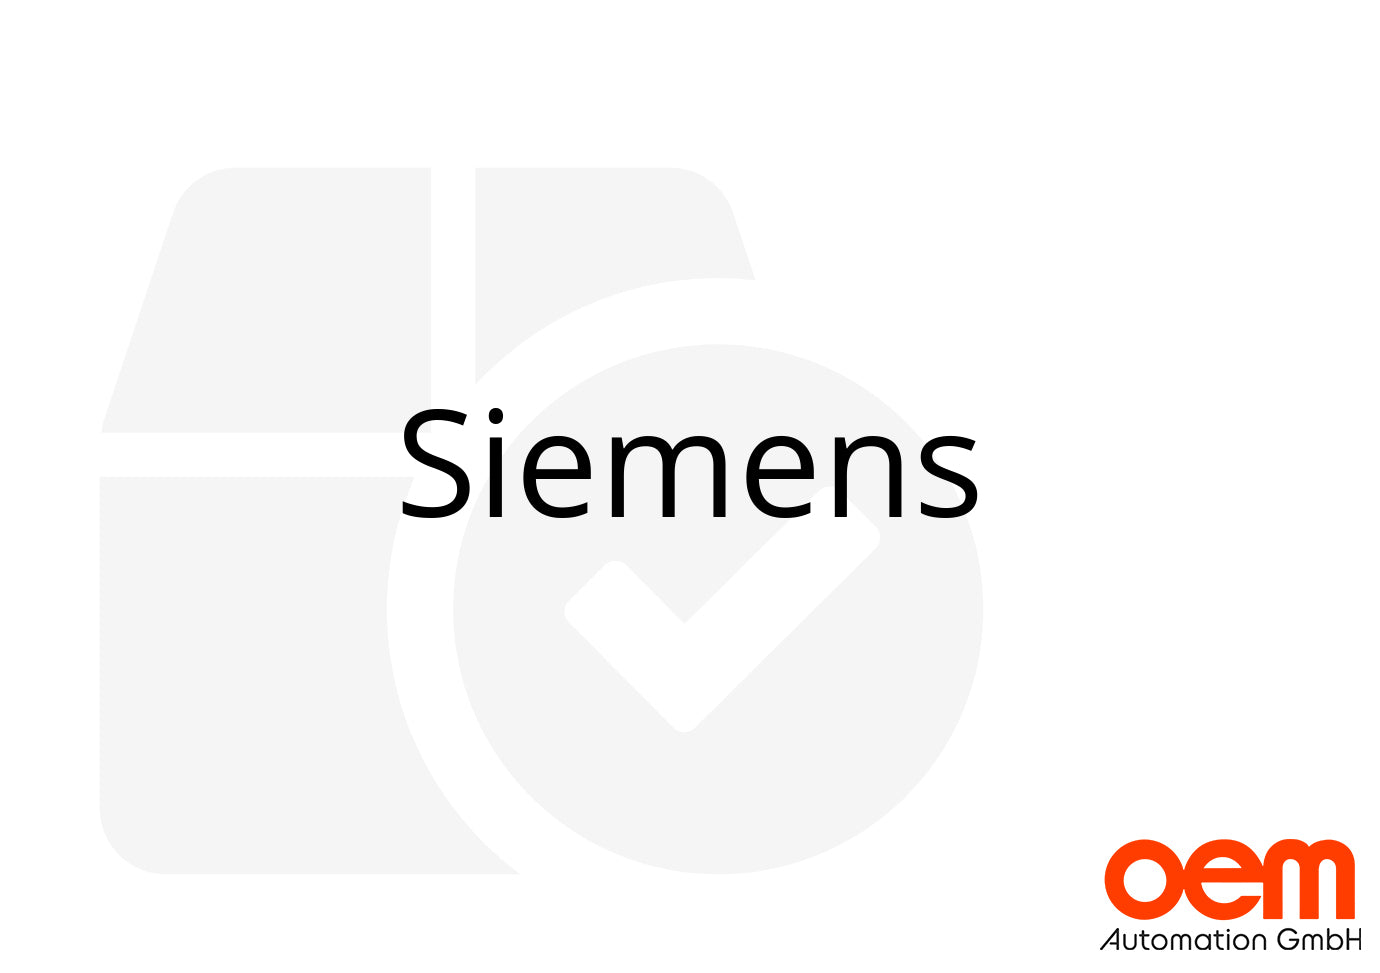 Siemens 3RT2015-1AP02